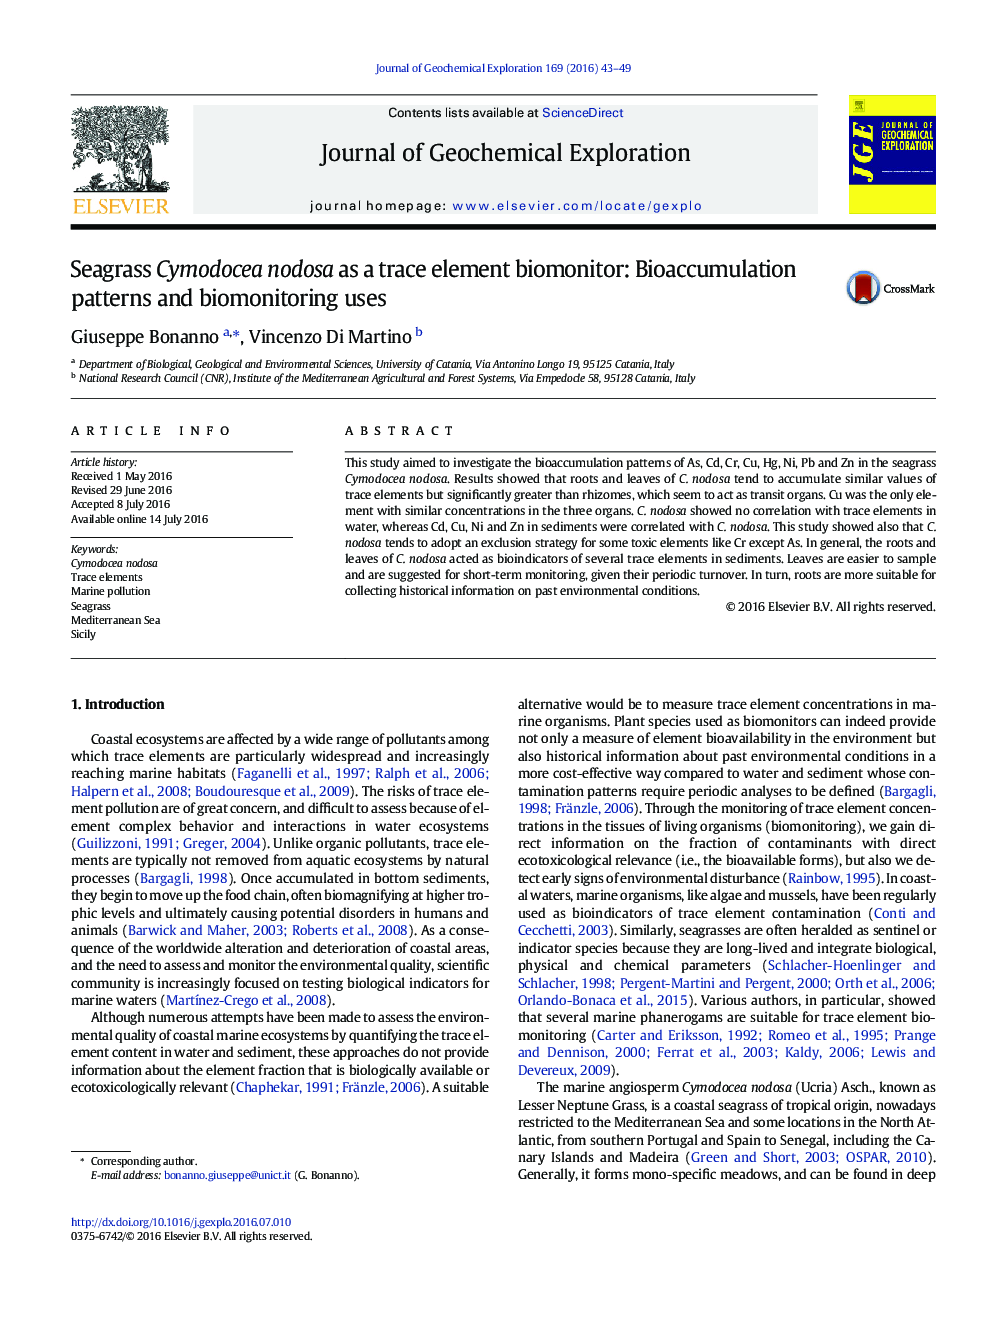 Seagrass Cymodocea nodosa as a trace element biomonitor: Bioaccumulation patterns and biomonitoring uses